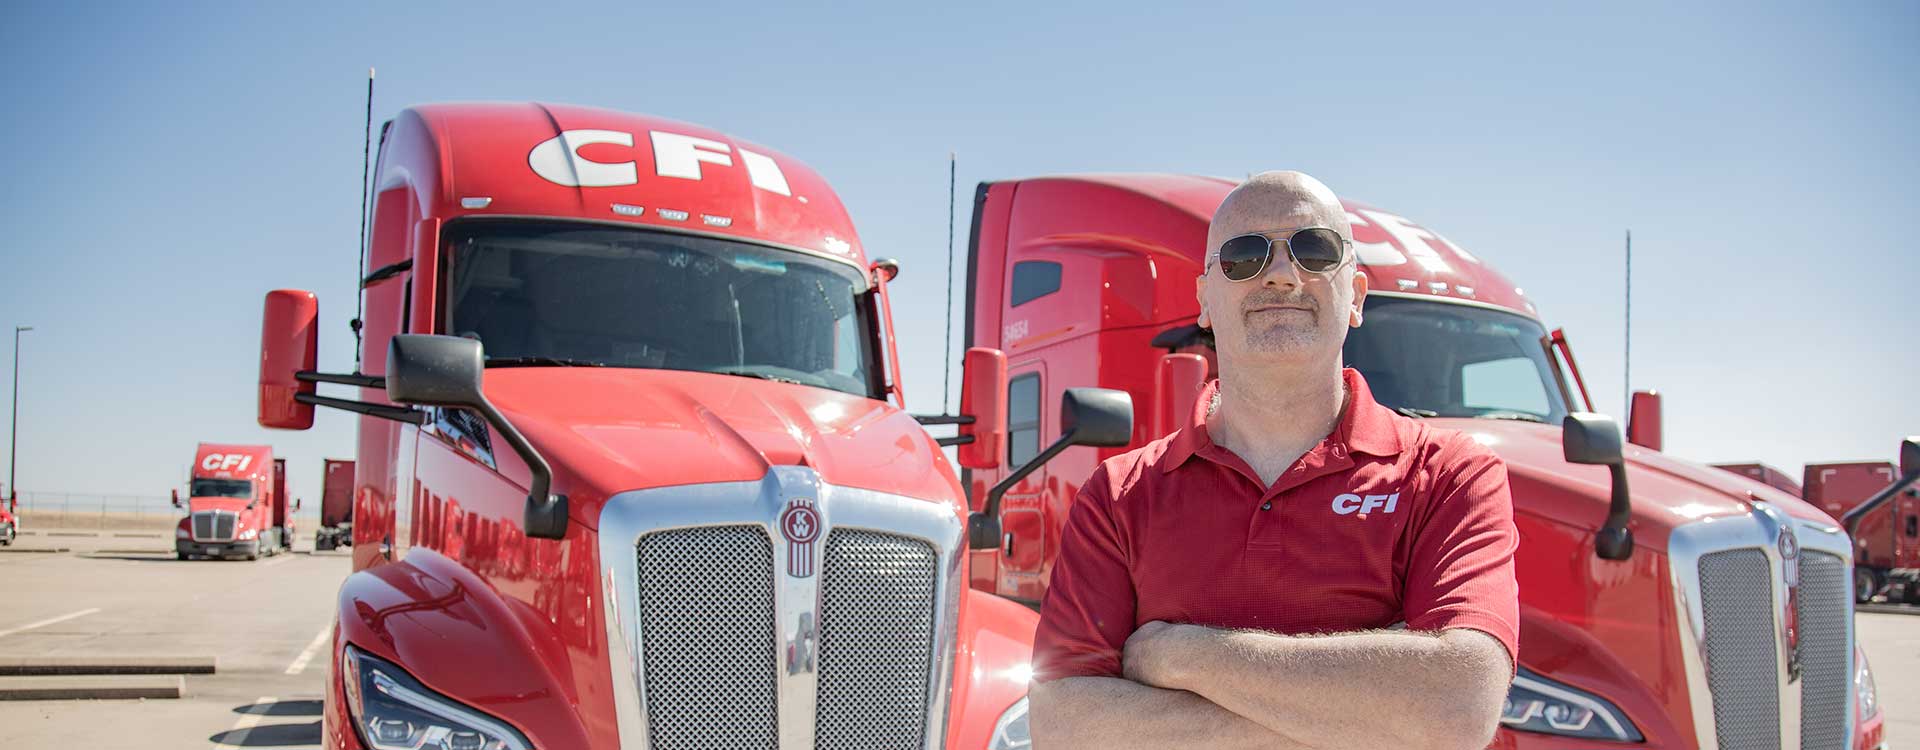 Man in CFI shirt in front of red CFI trucks